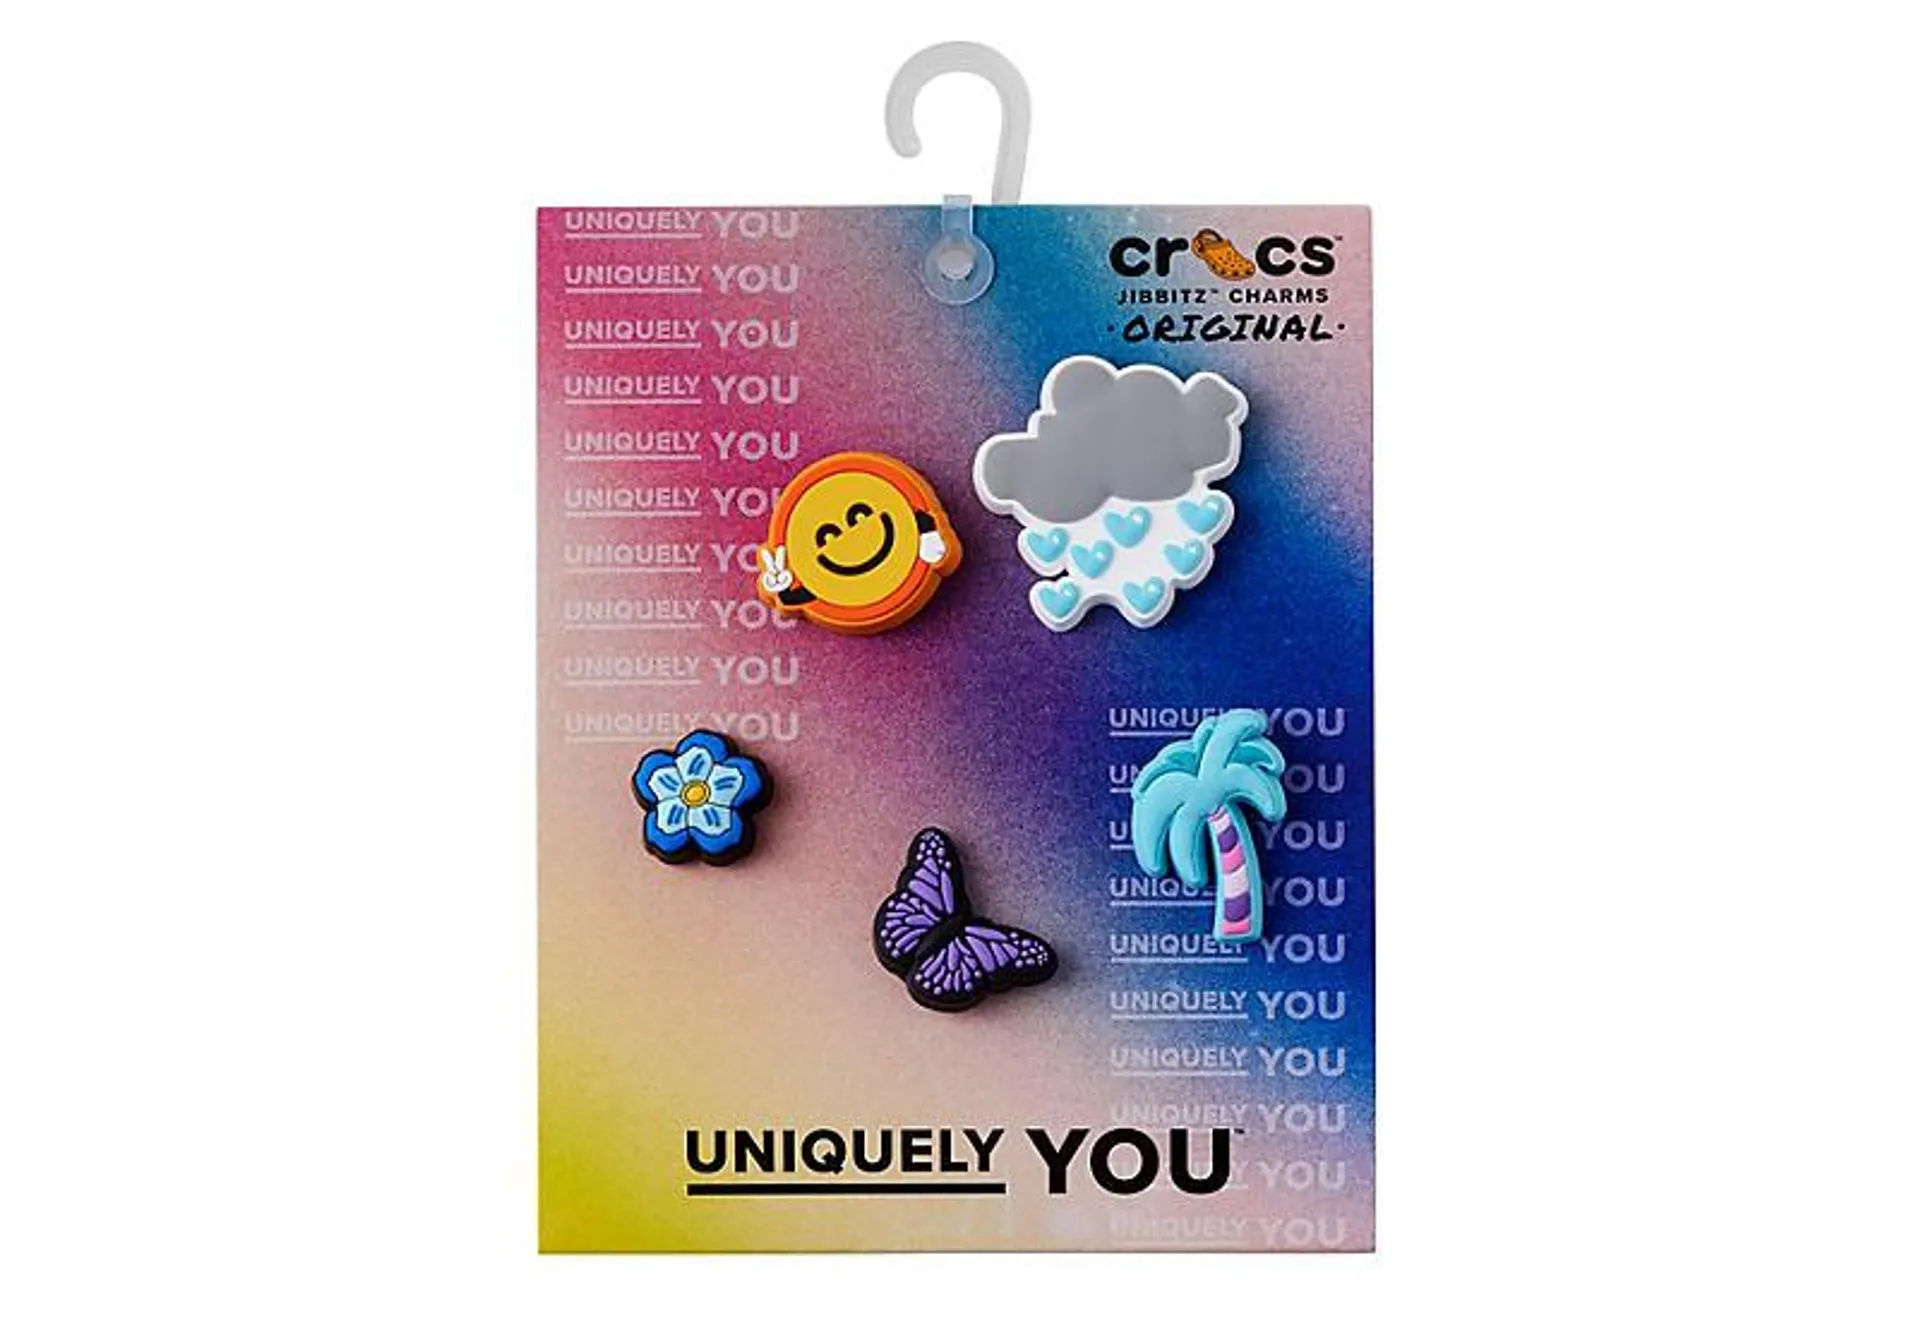 Crocs Unisex Chill Summer 5 Pack - Assorted